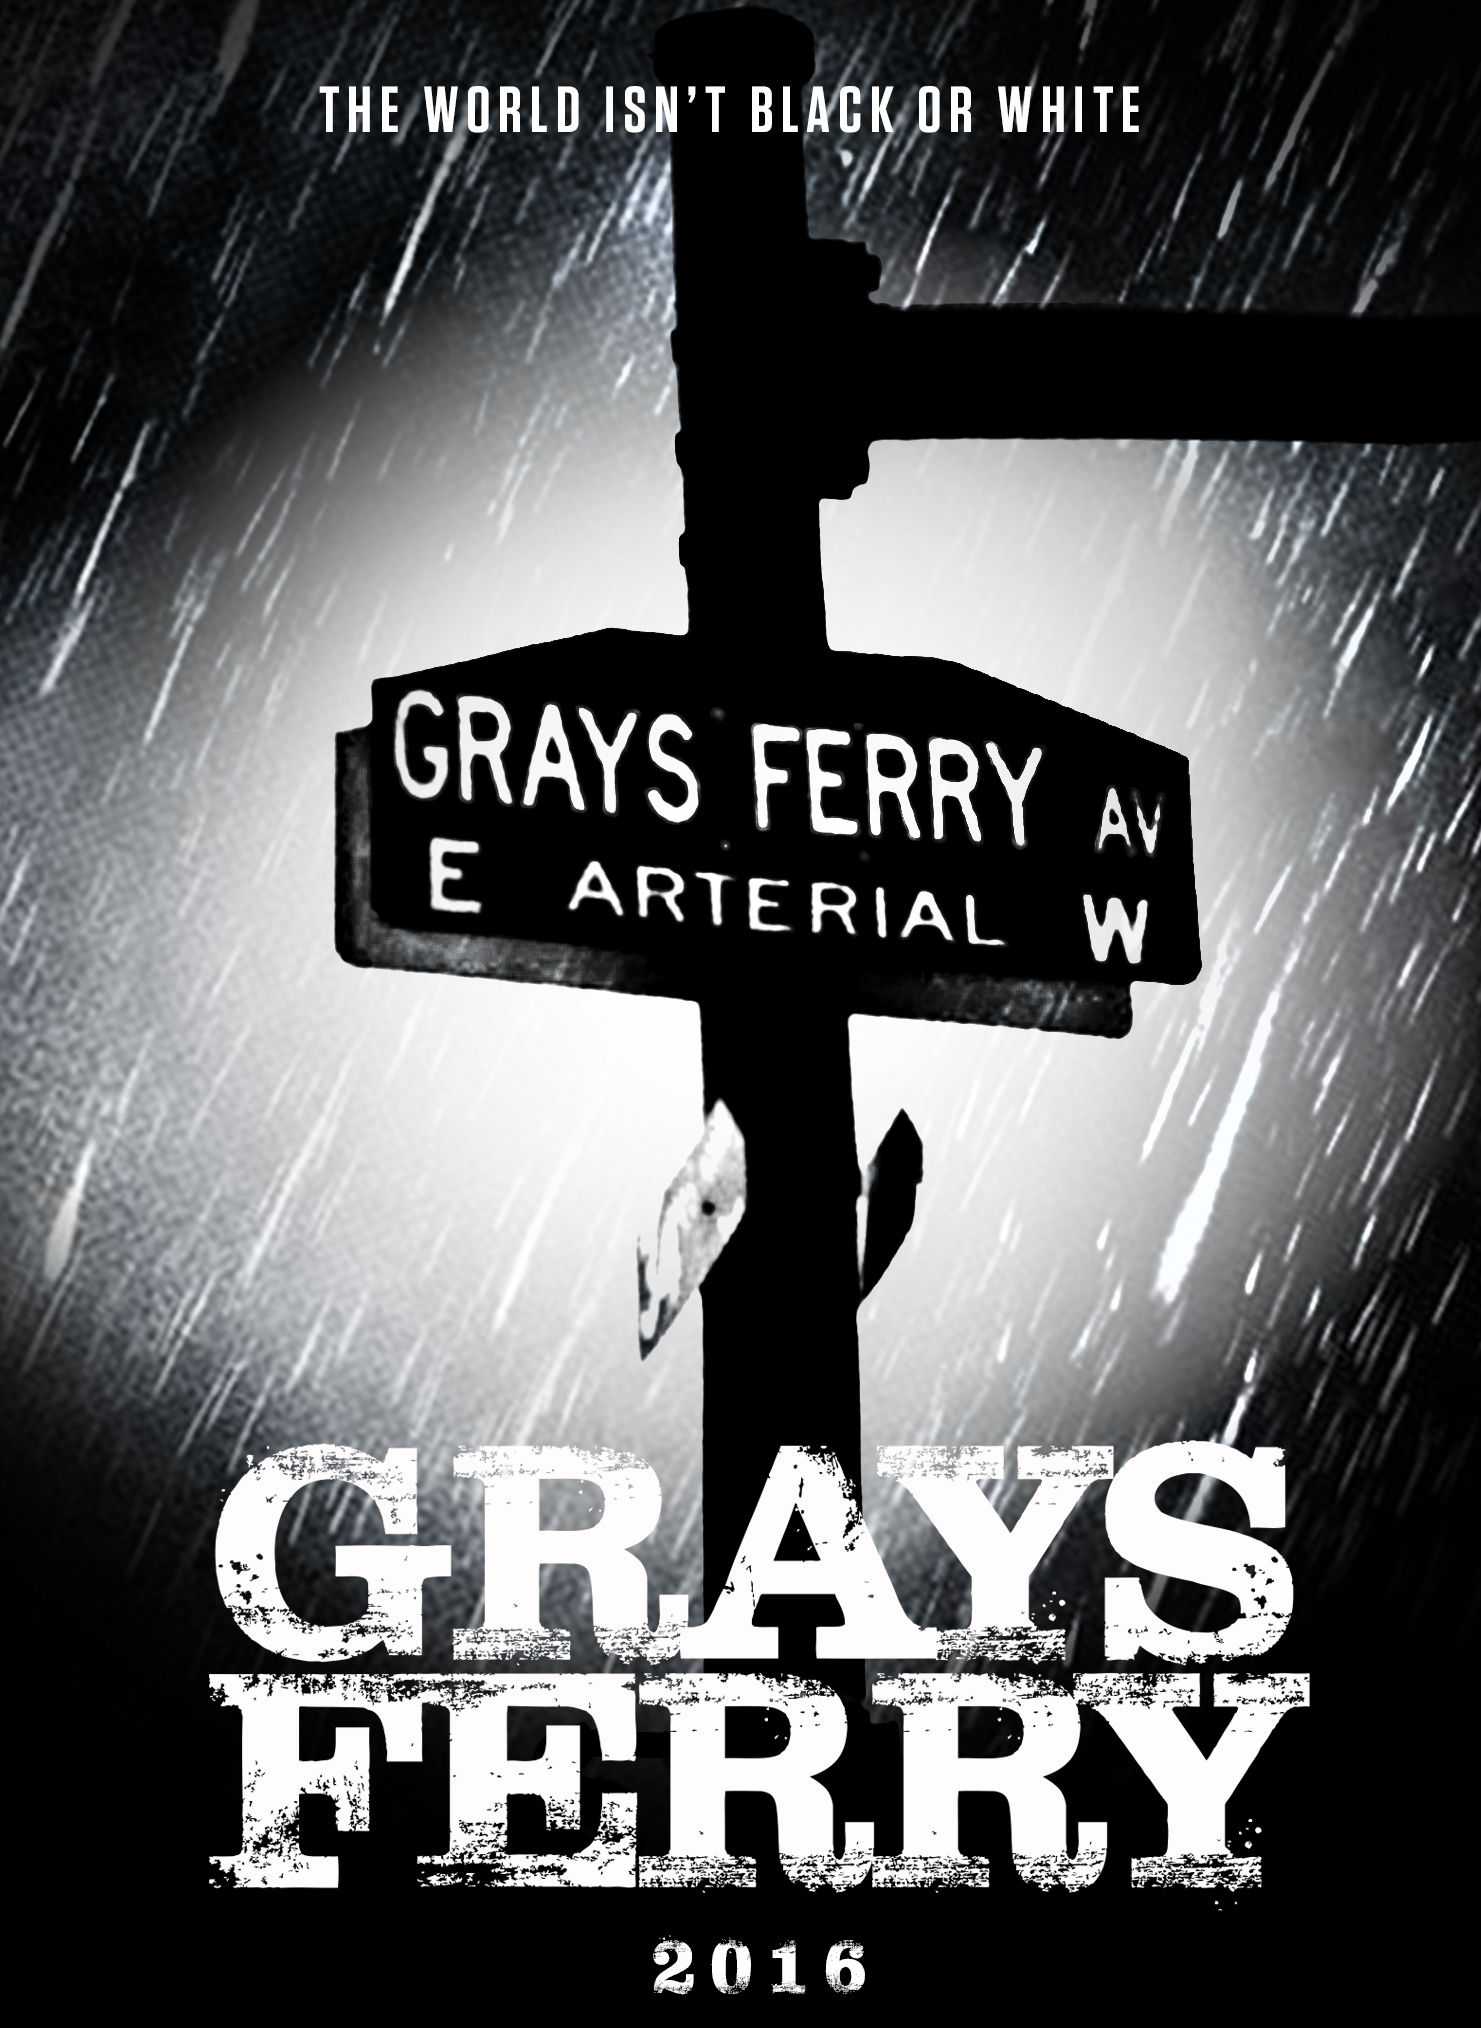 Grays Ferry